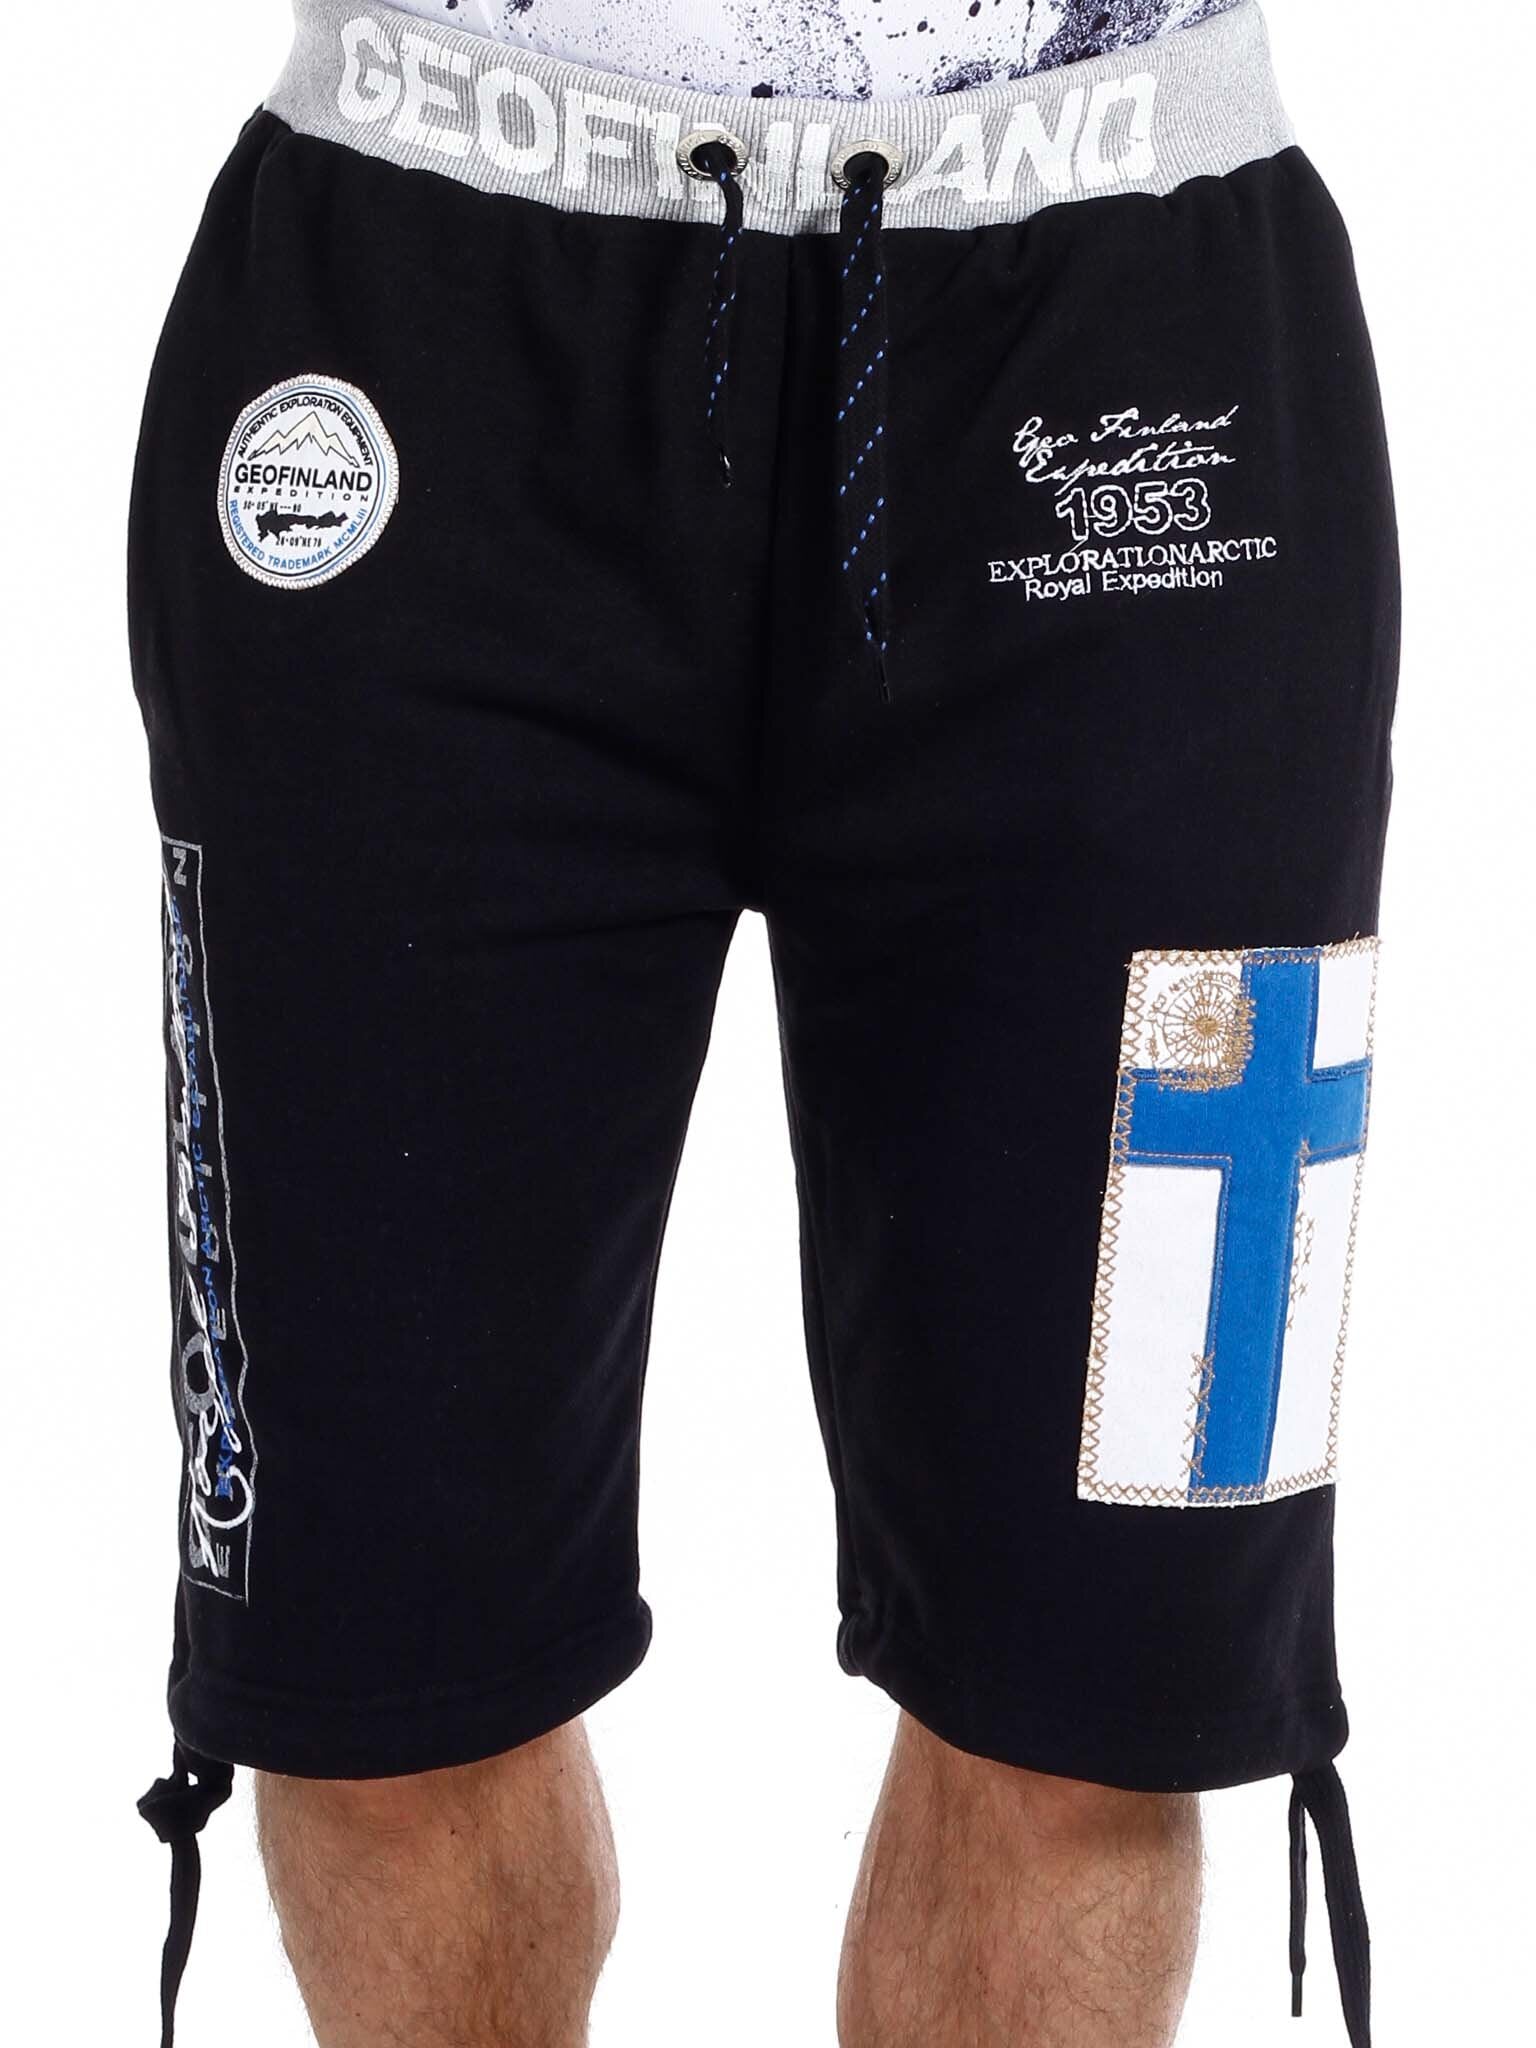 Geo Finland Bermuda Shorts - Svart